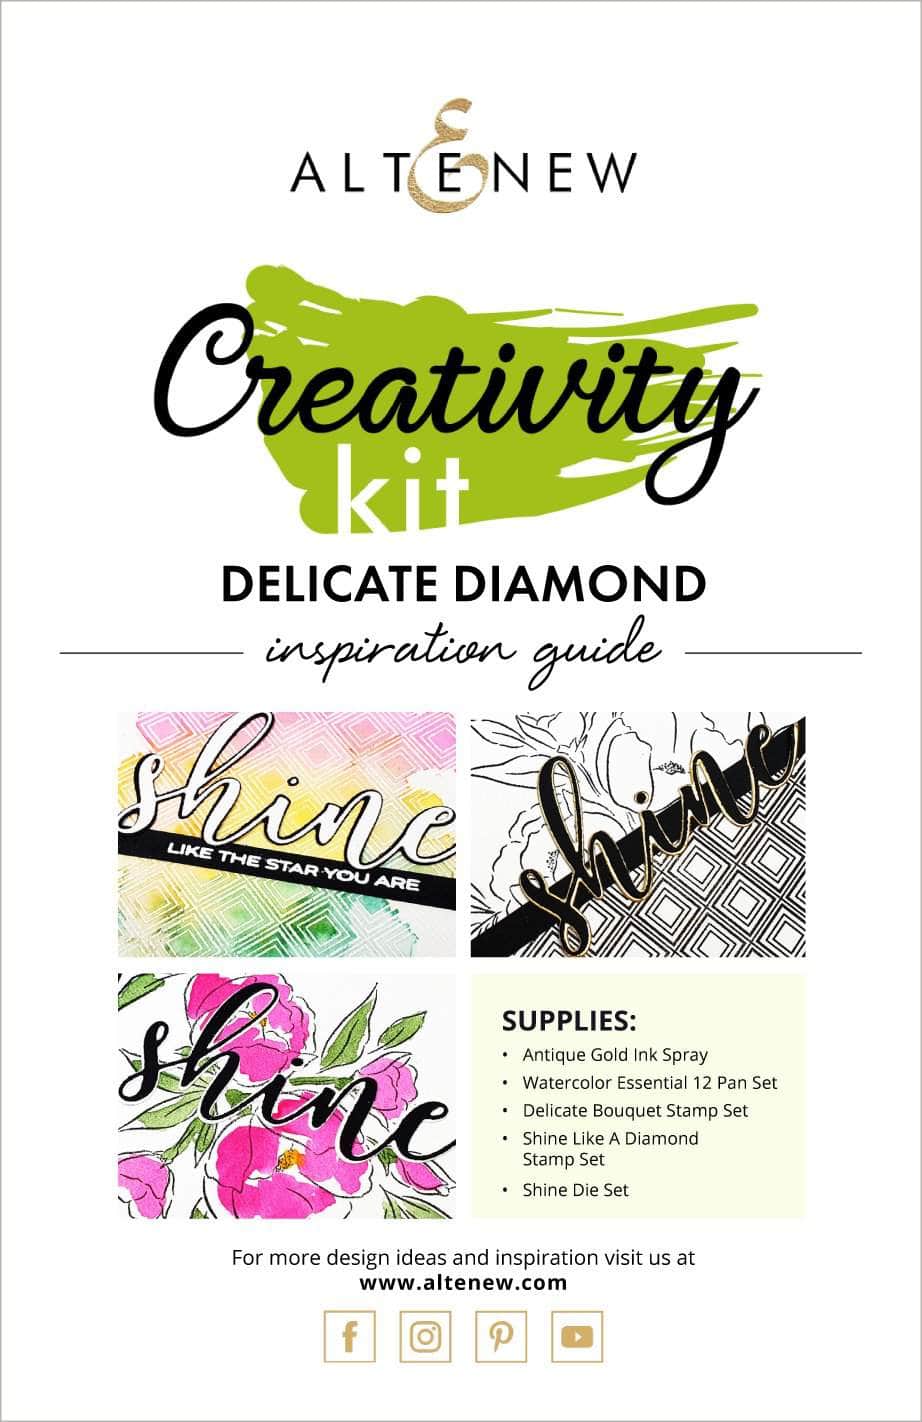 Printed Media Delicate Diamond Creativity Kit Inspiration Guide